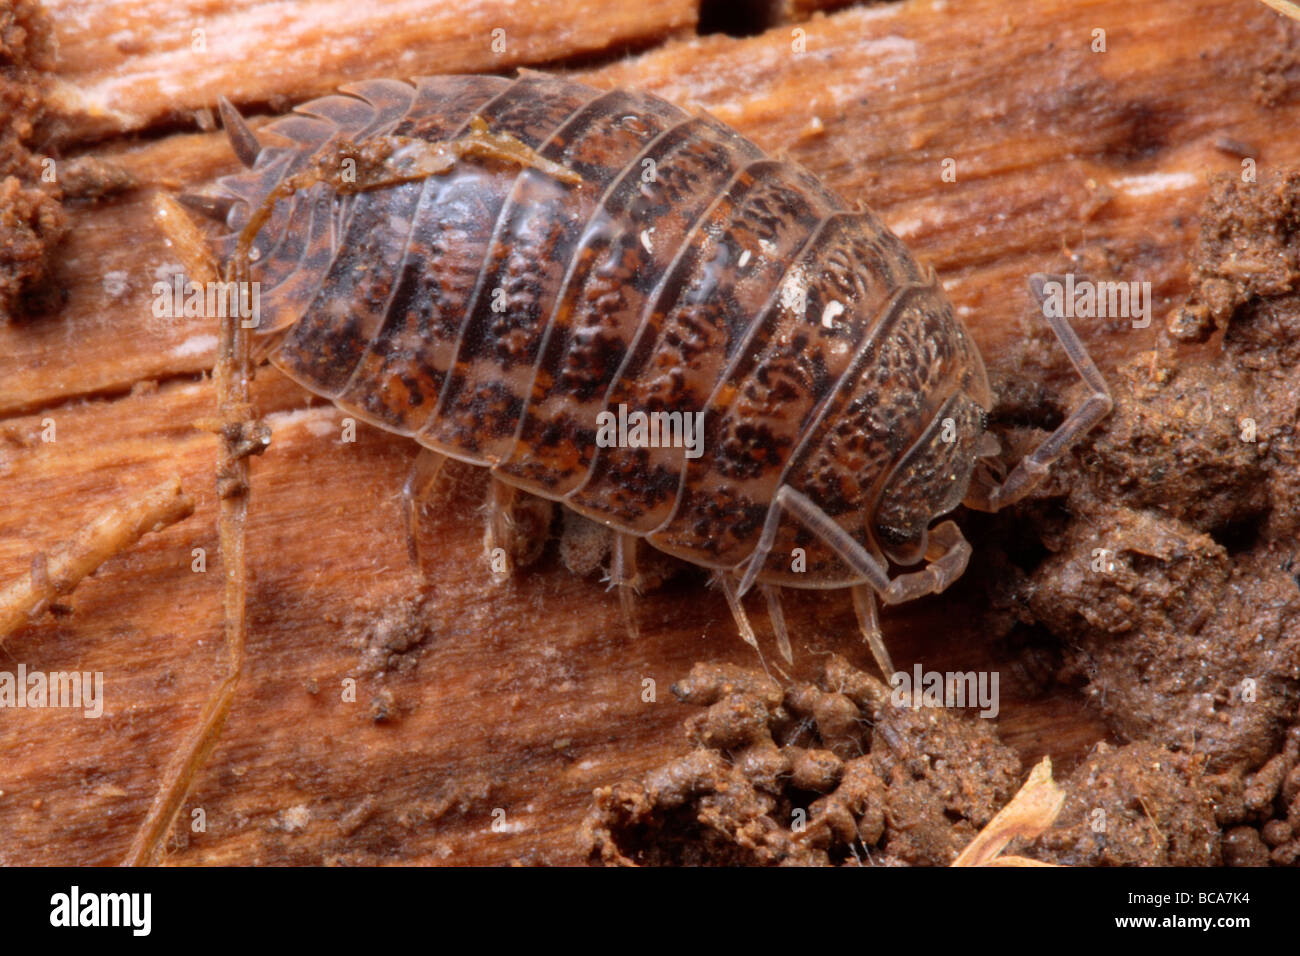 A pillbug feeding on detritus. Stock Photo